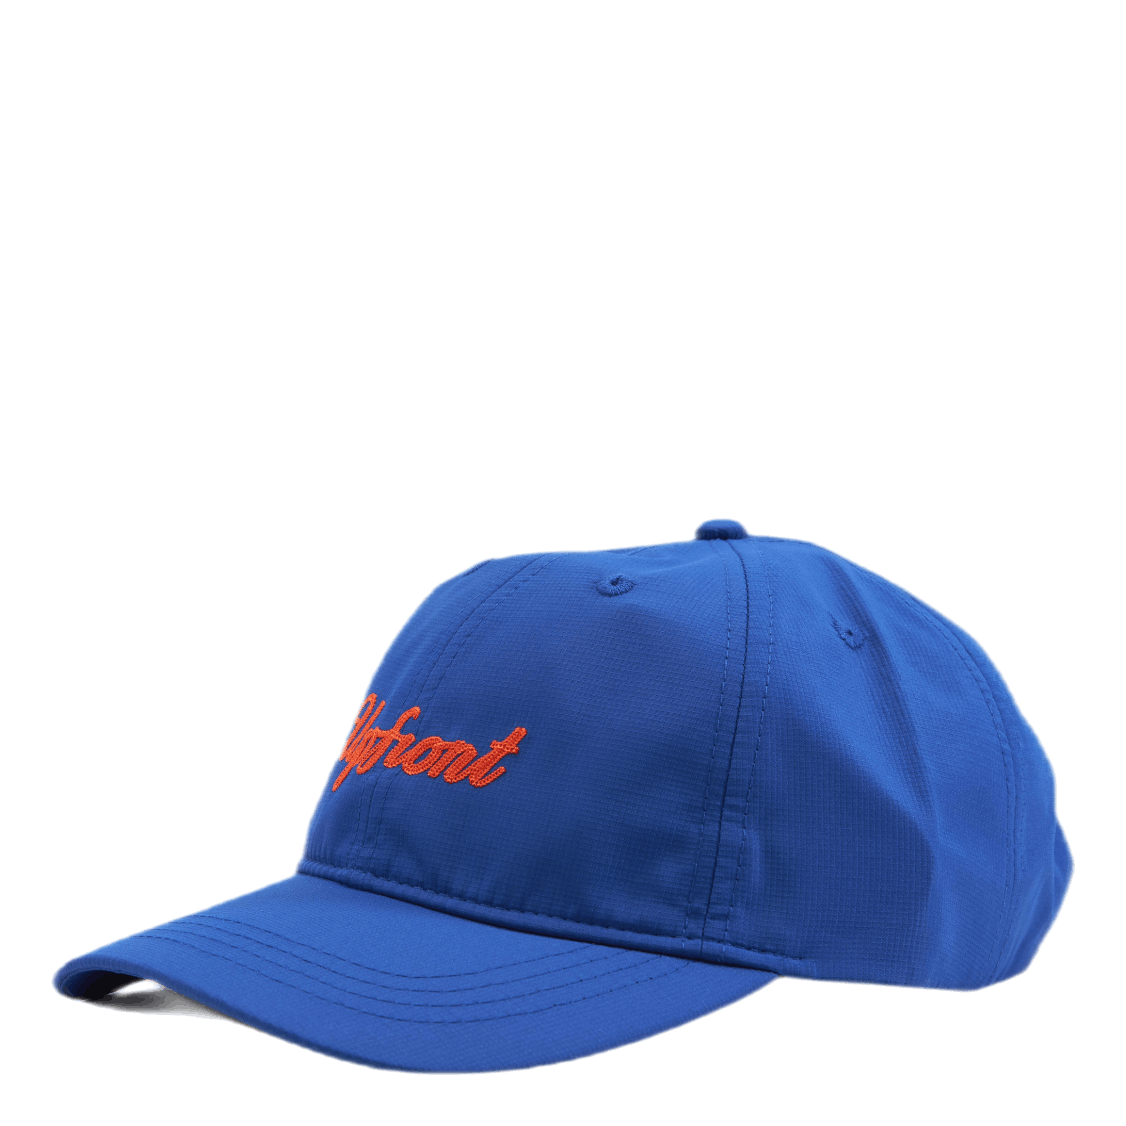 Reef Soft Baseball Cap Blue